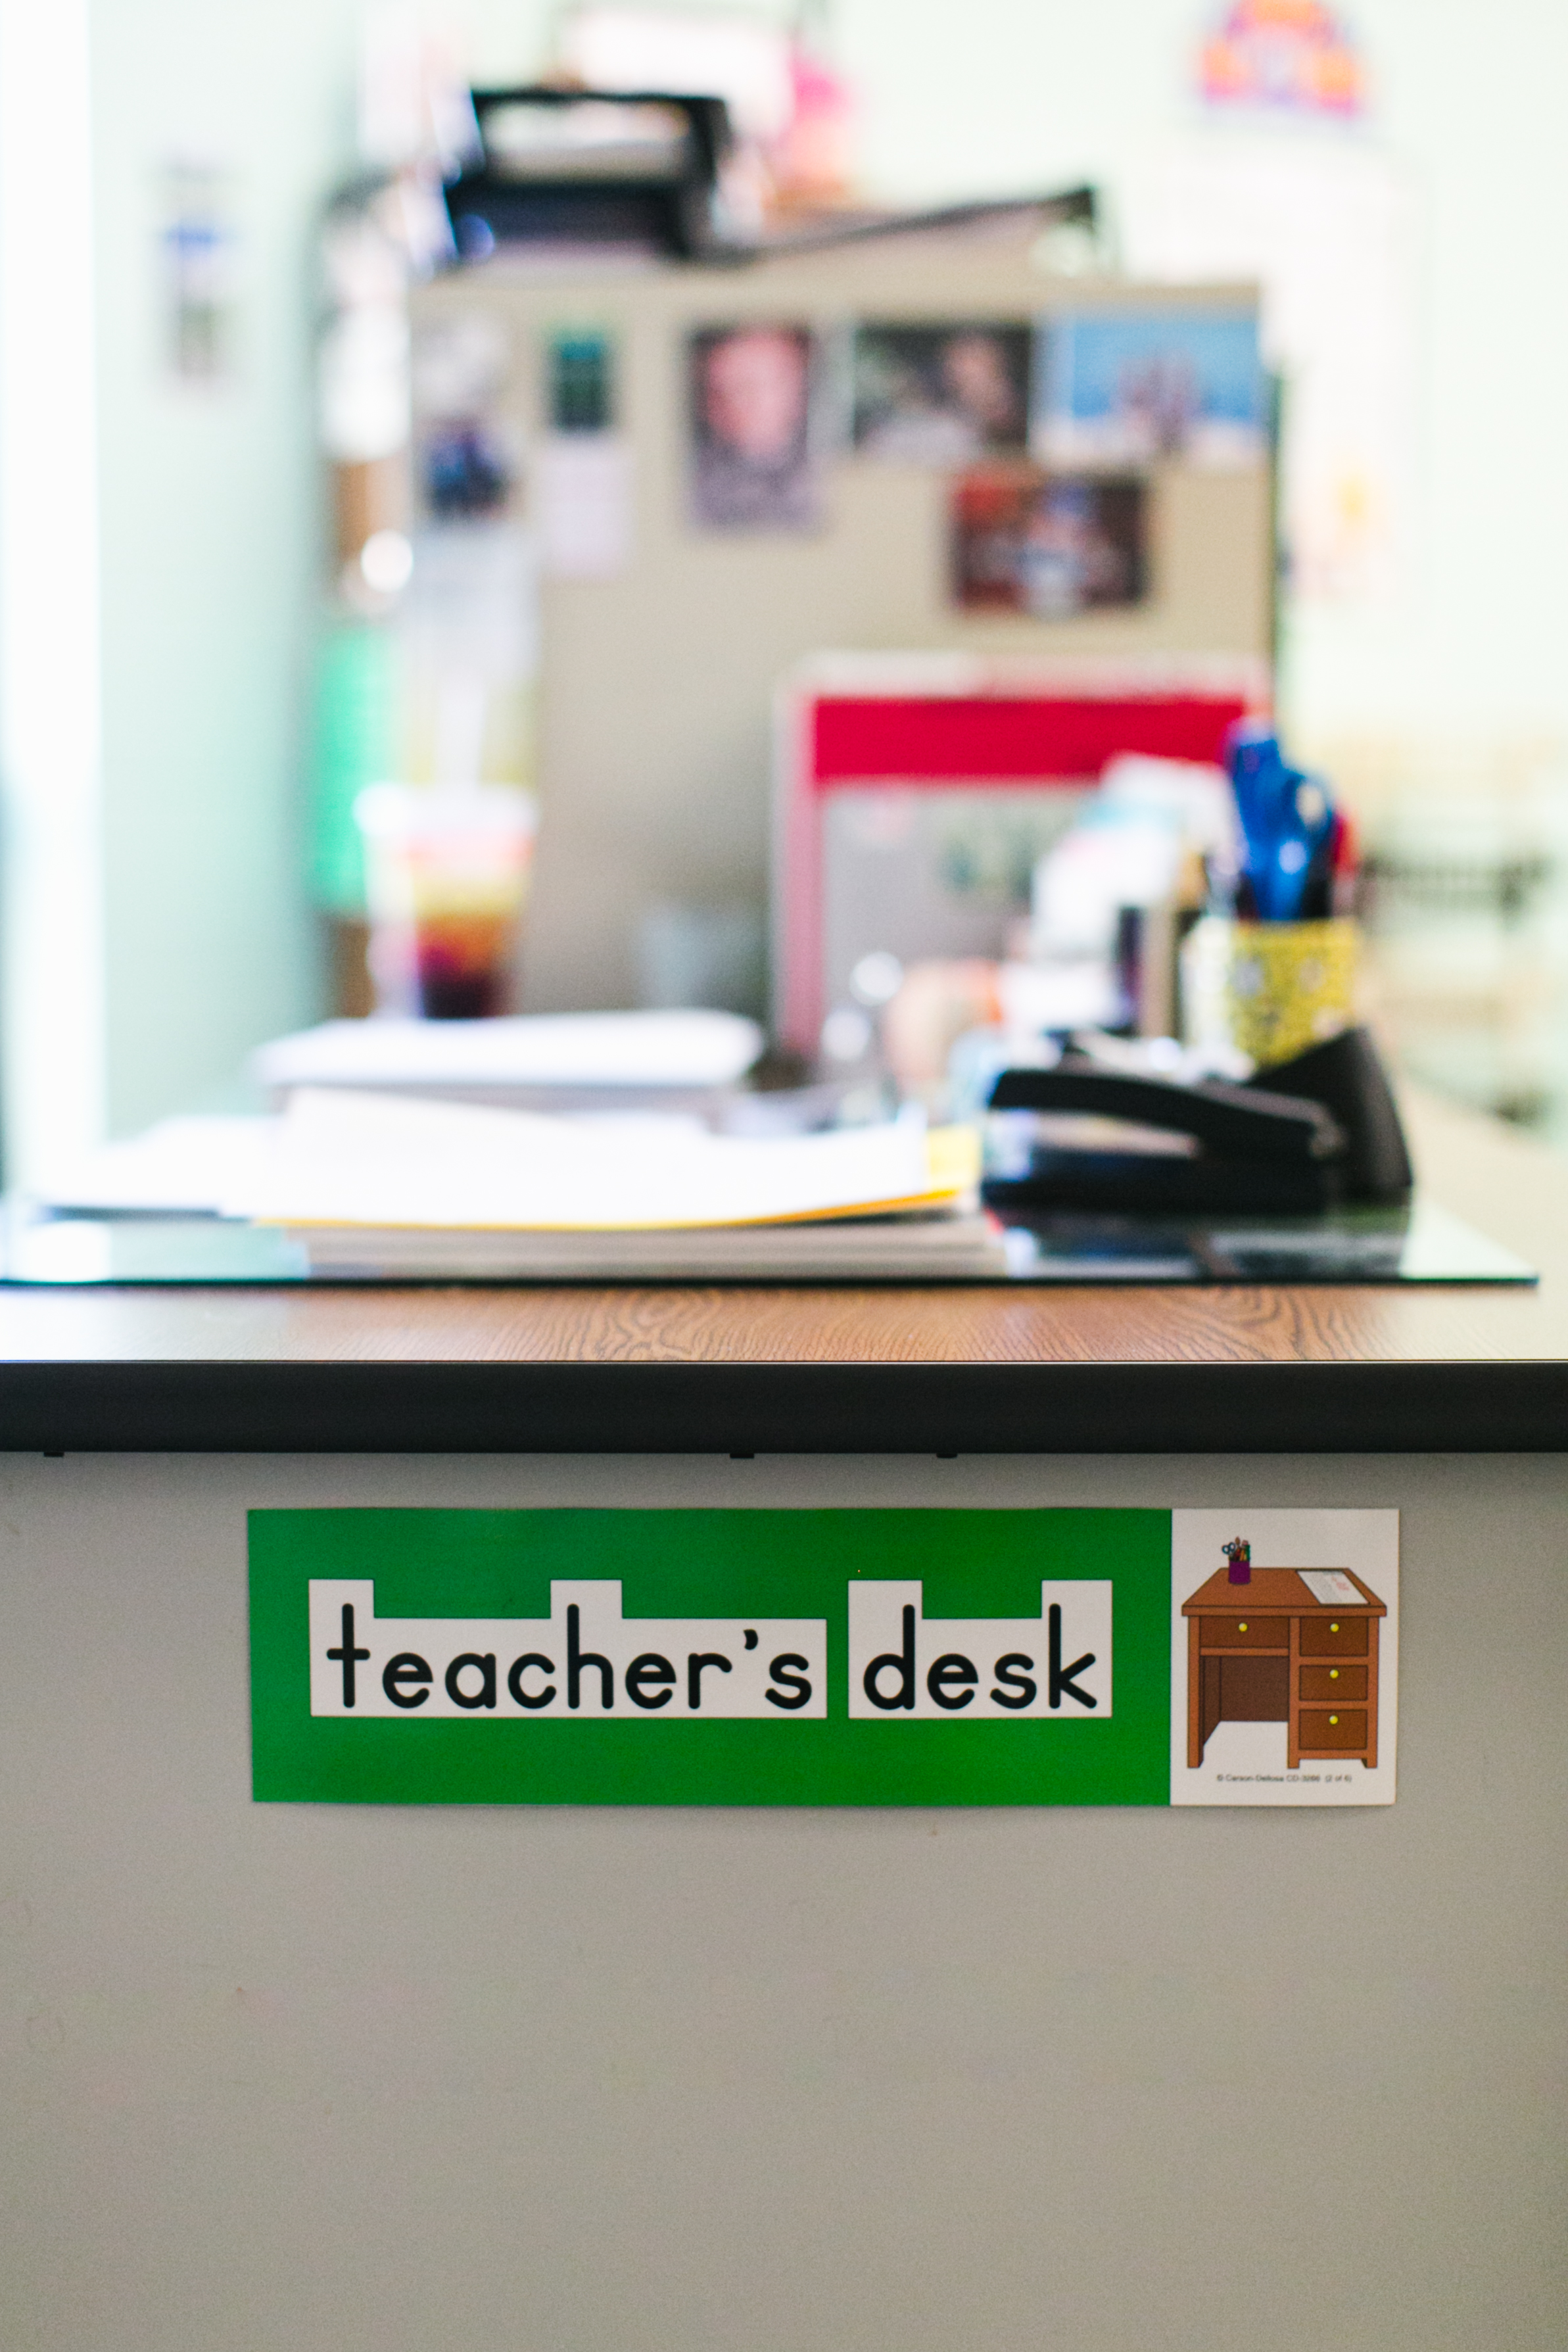 MREA Outlines Key Ways to Address Teacher Shortages